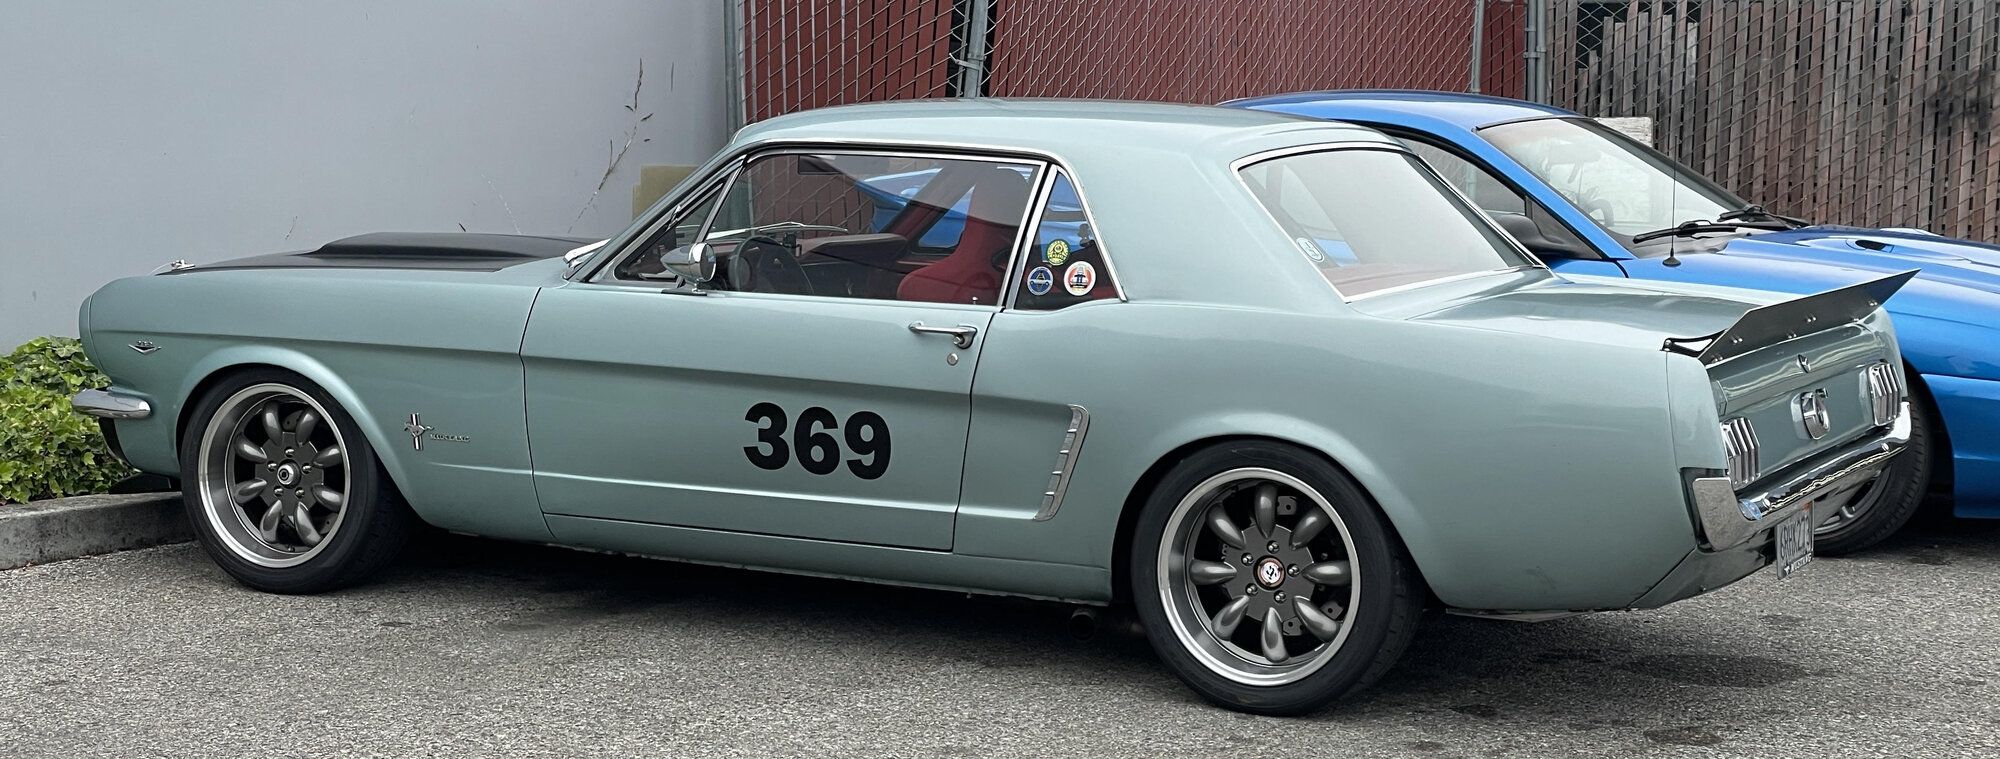 1965 Mustang
(1965 Notchback #369)